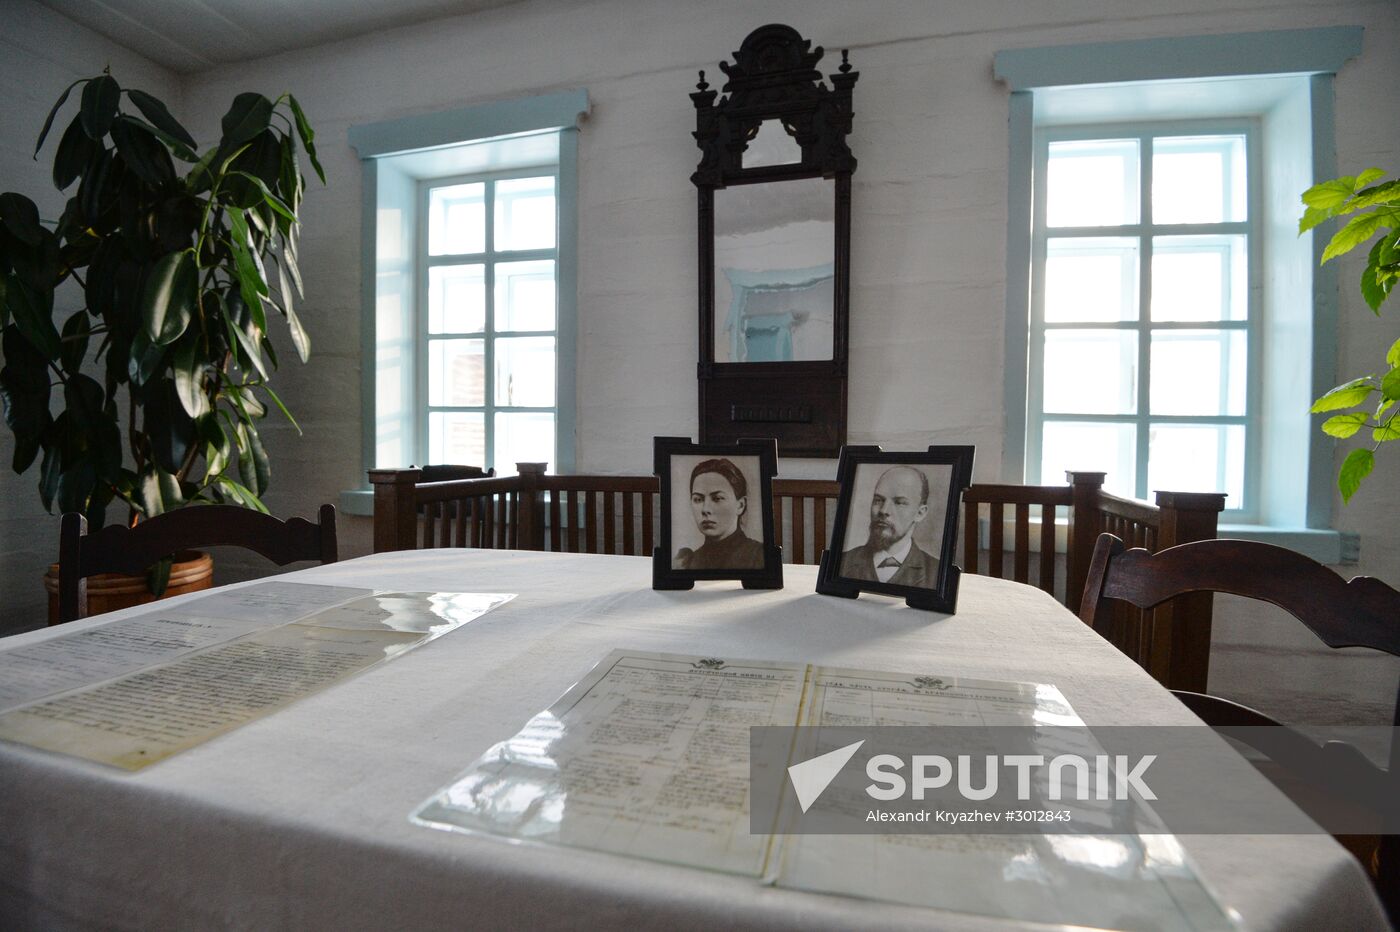 Shushenskoye Museum-Reserve in Krasnoyarsk Territory